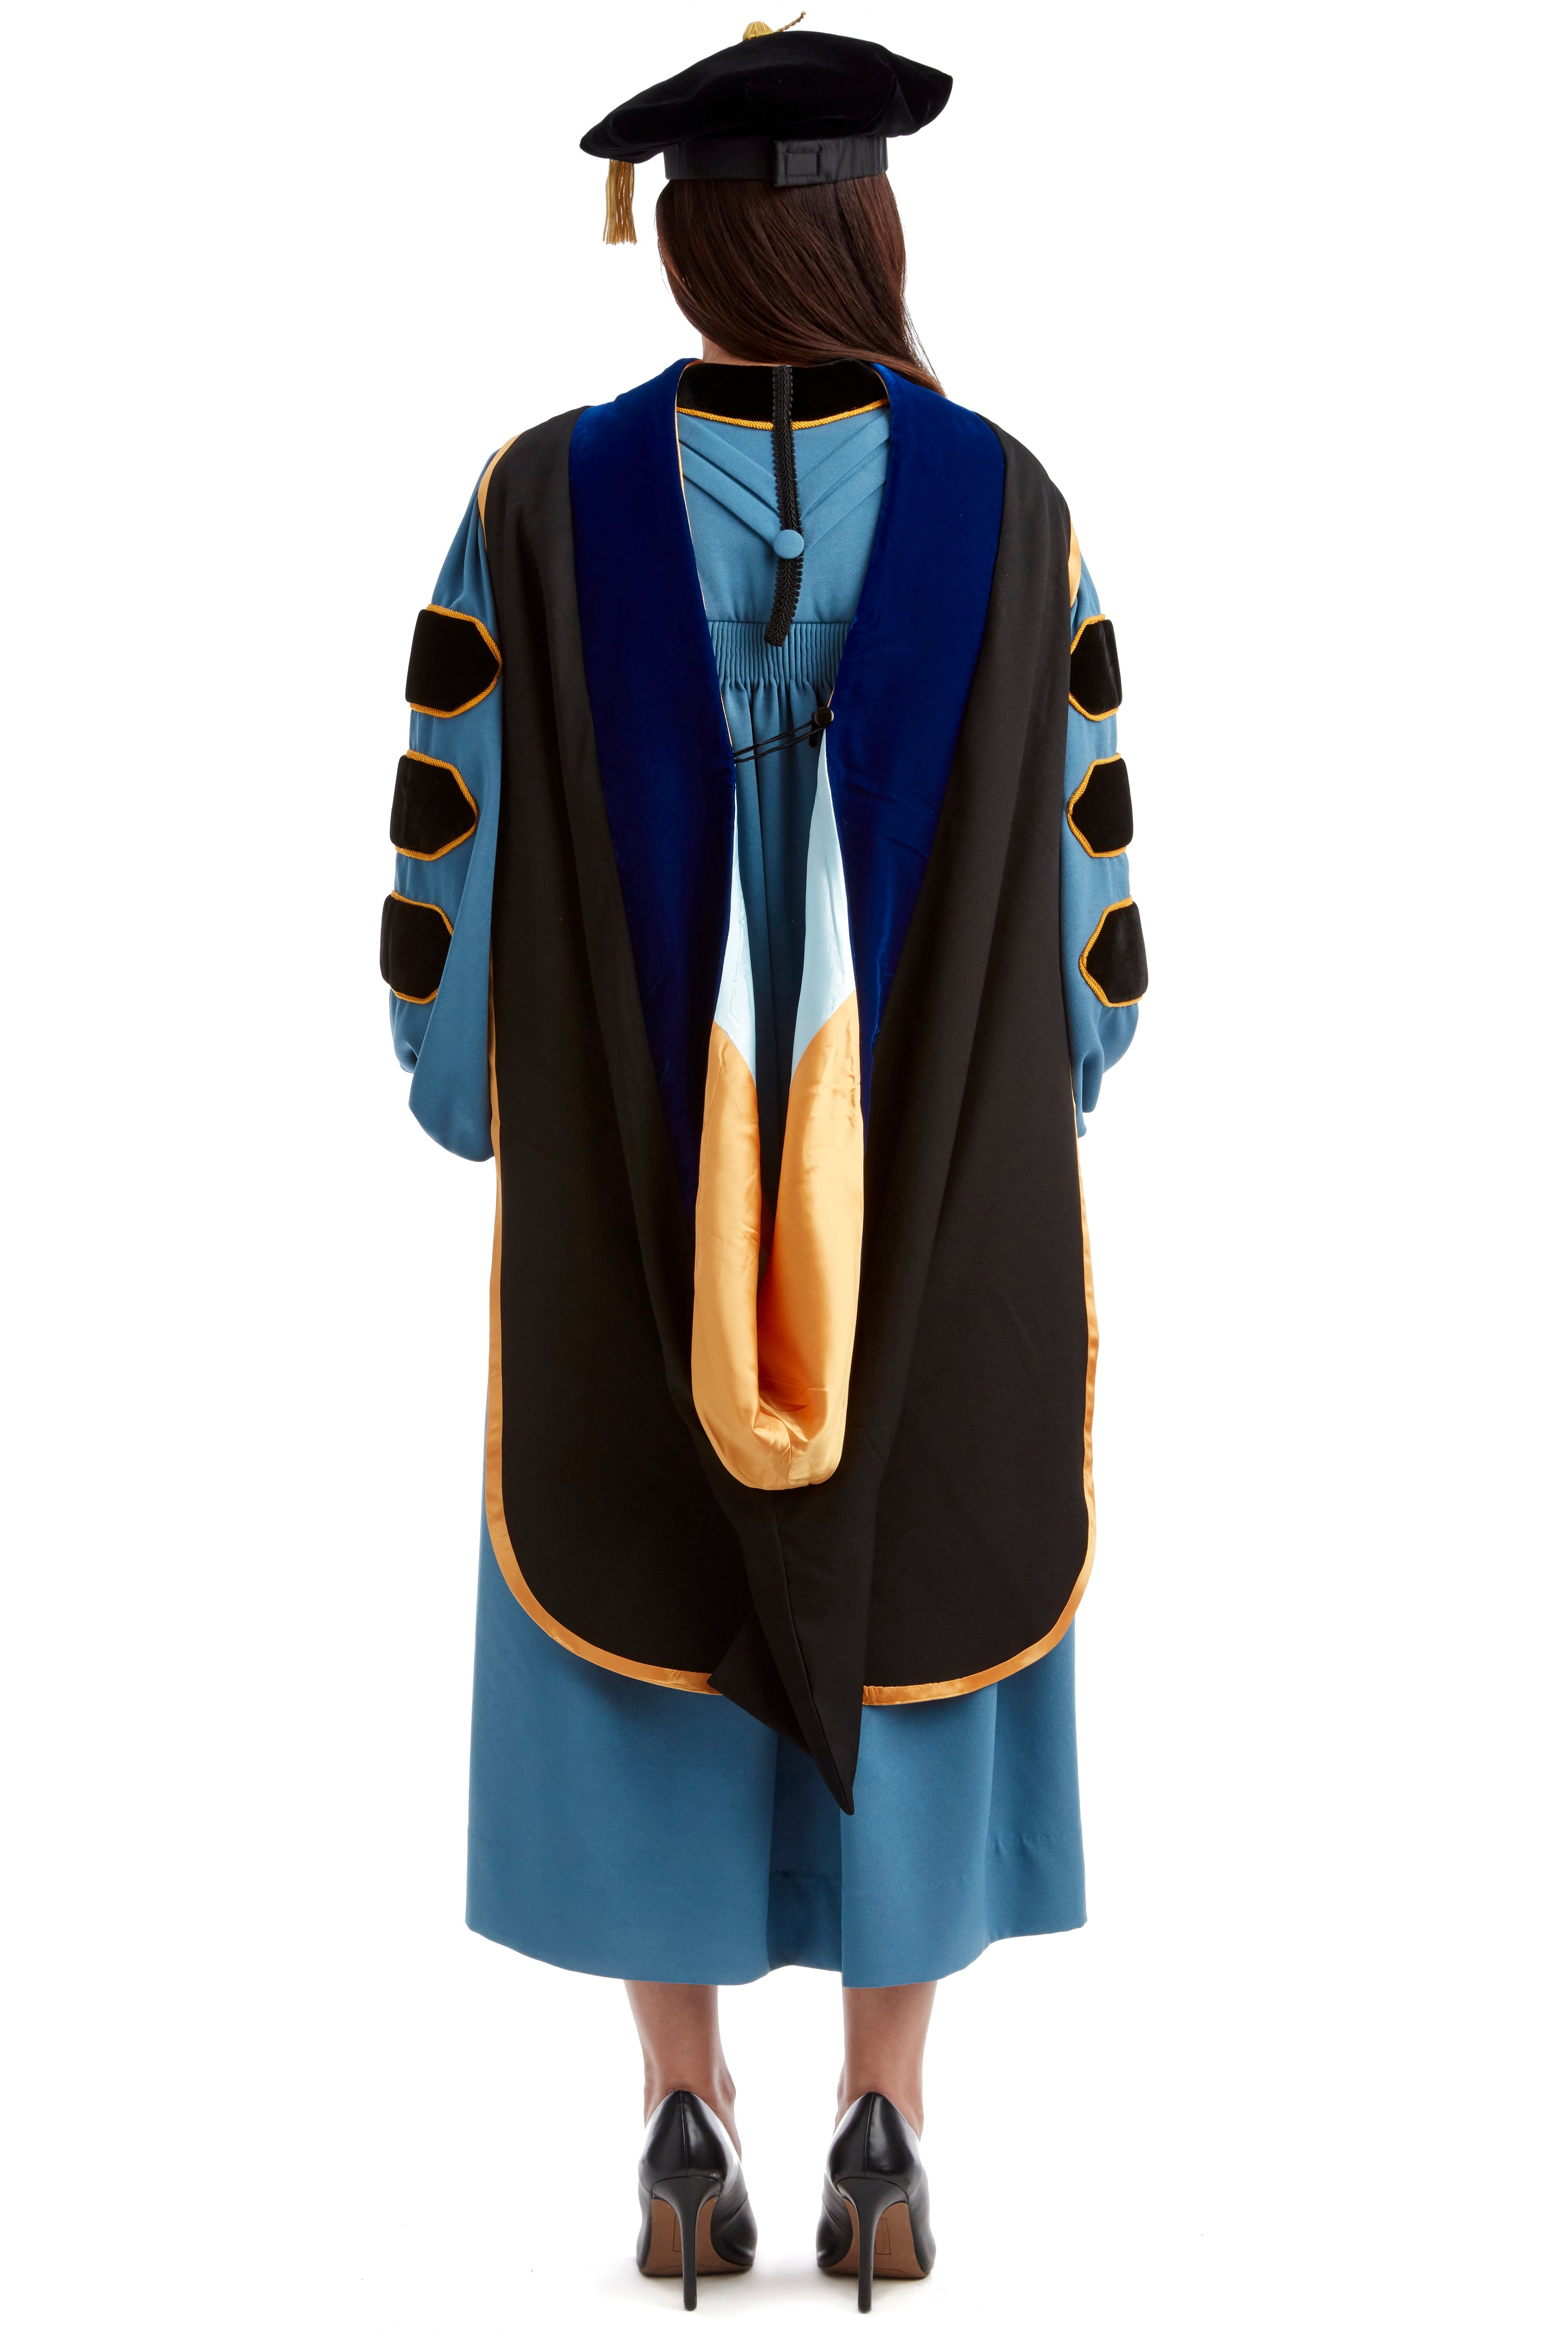 Graduation Dress Guide | Graduation gown, Dress guide, Graduation attire